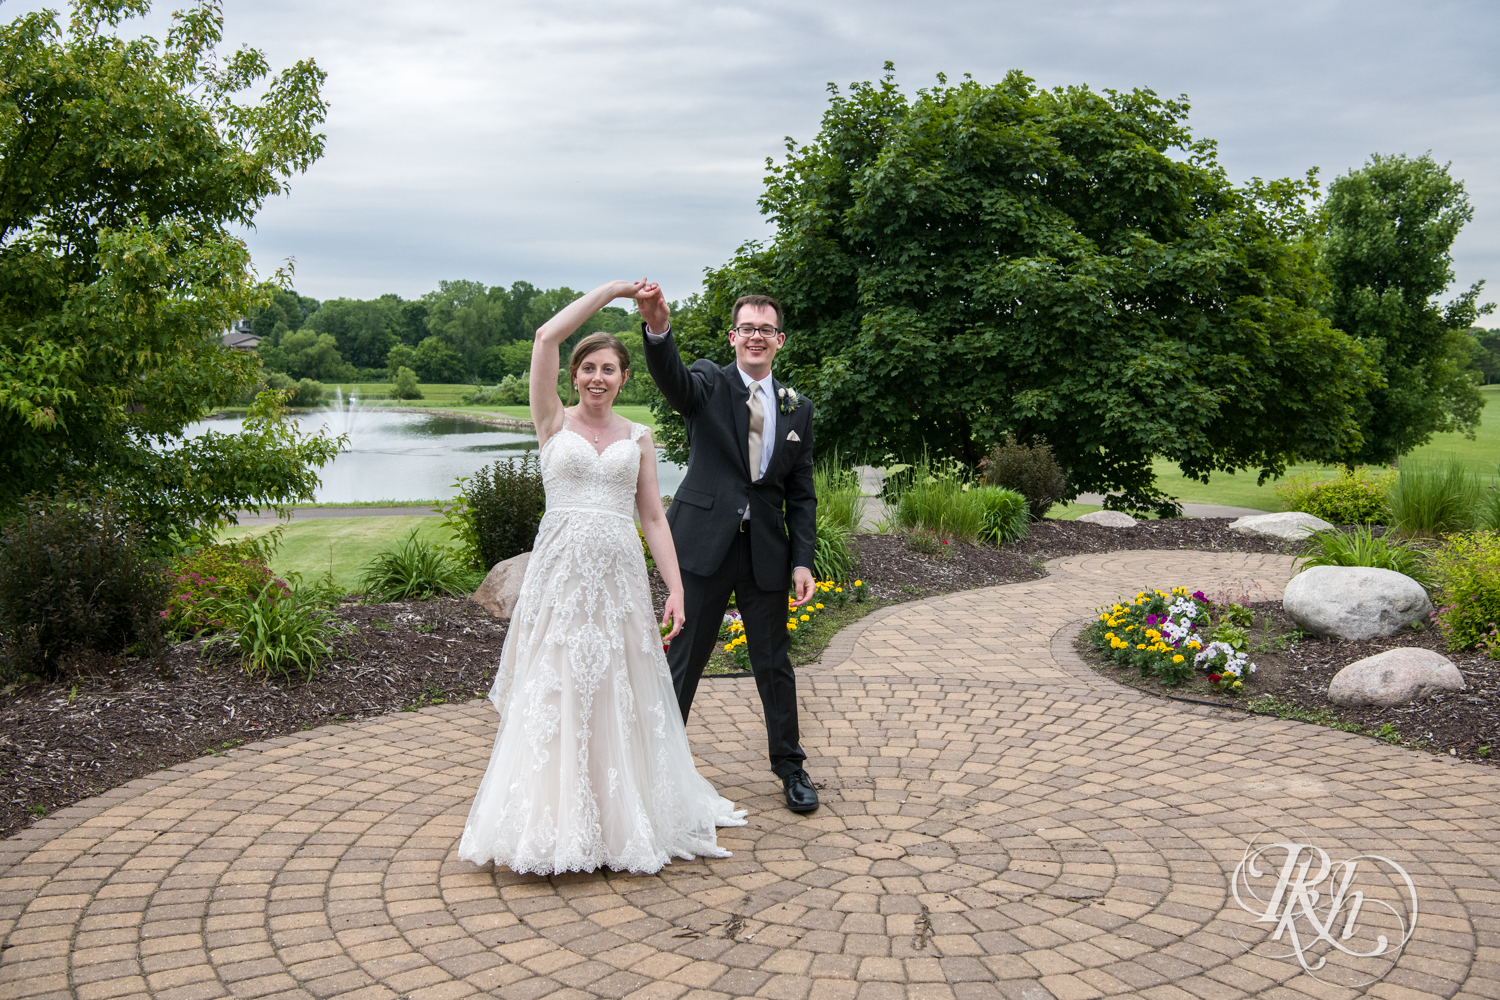 Bride and groom dance after wedding ceremony at Oak Glen Golf Course in Stillwater, Minnesota.